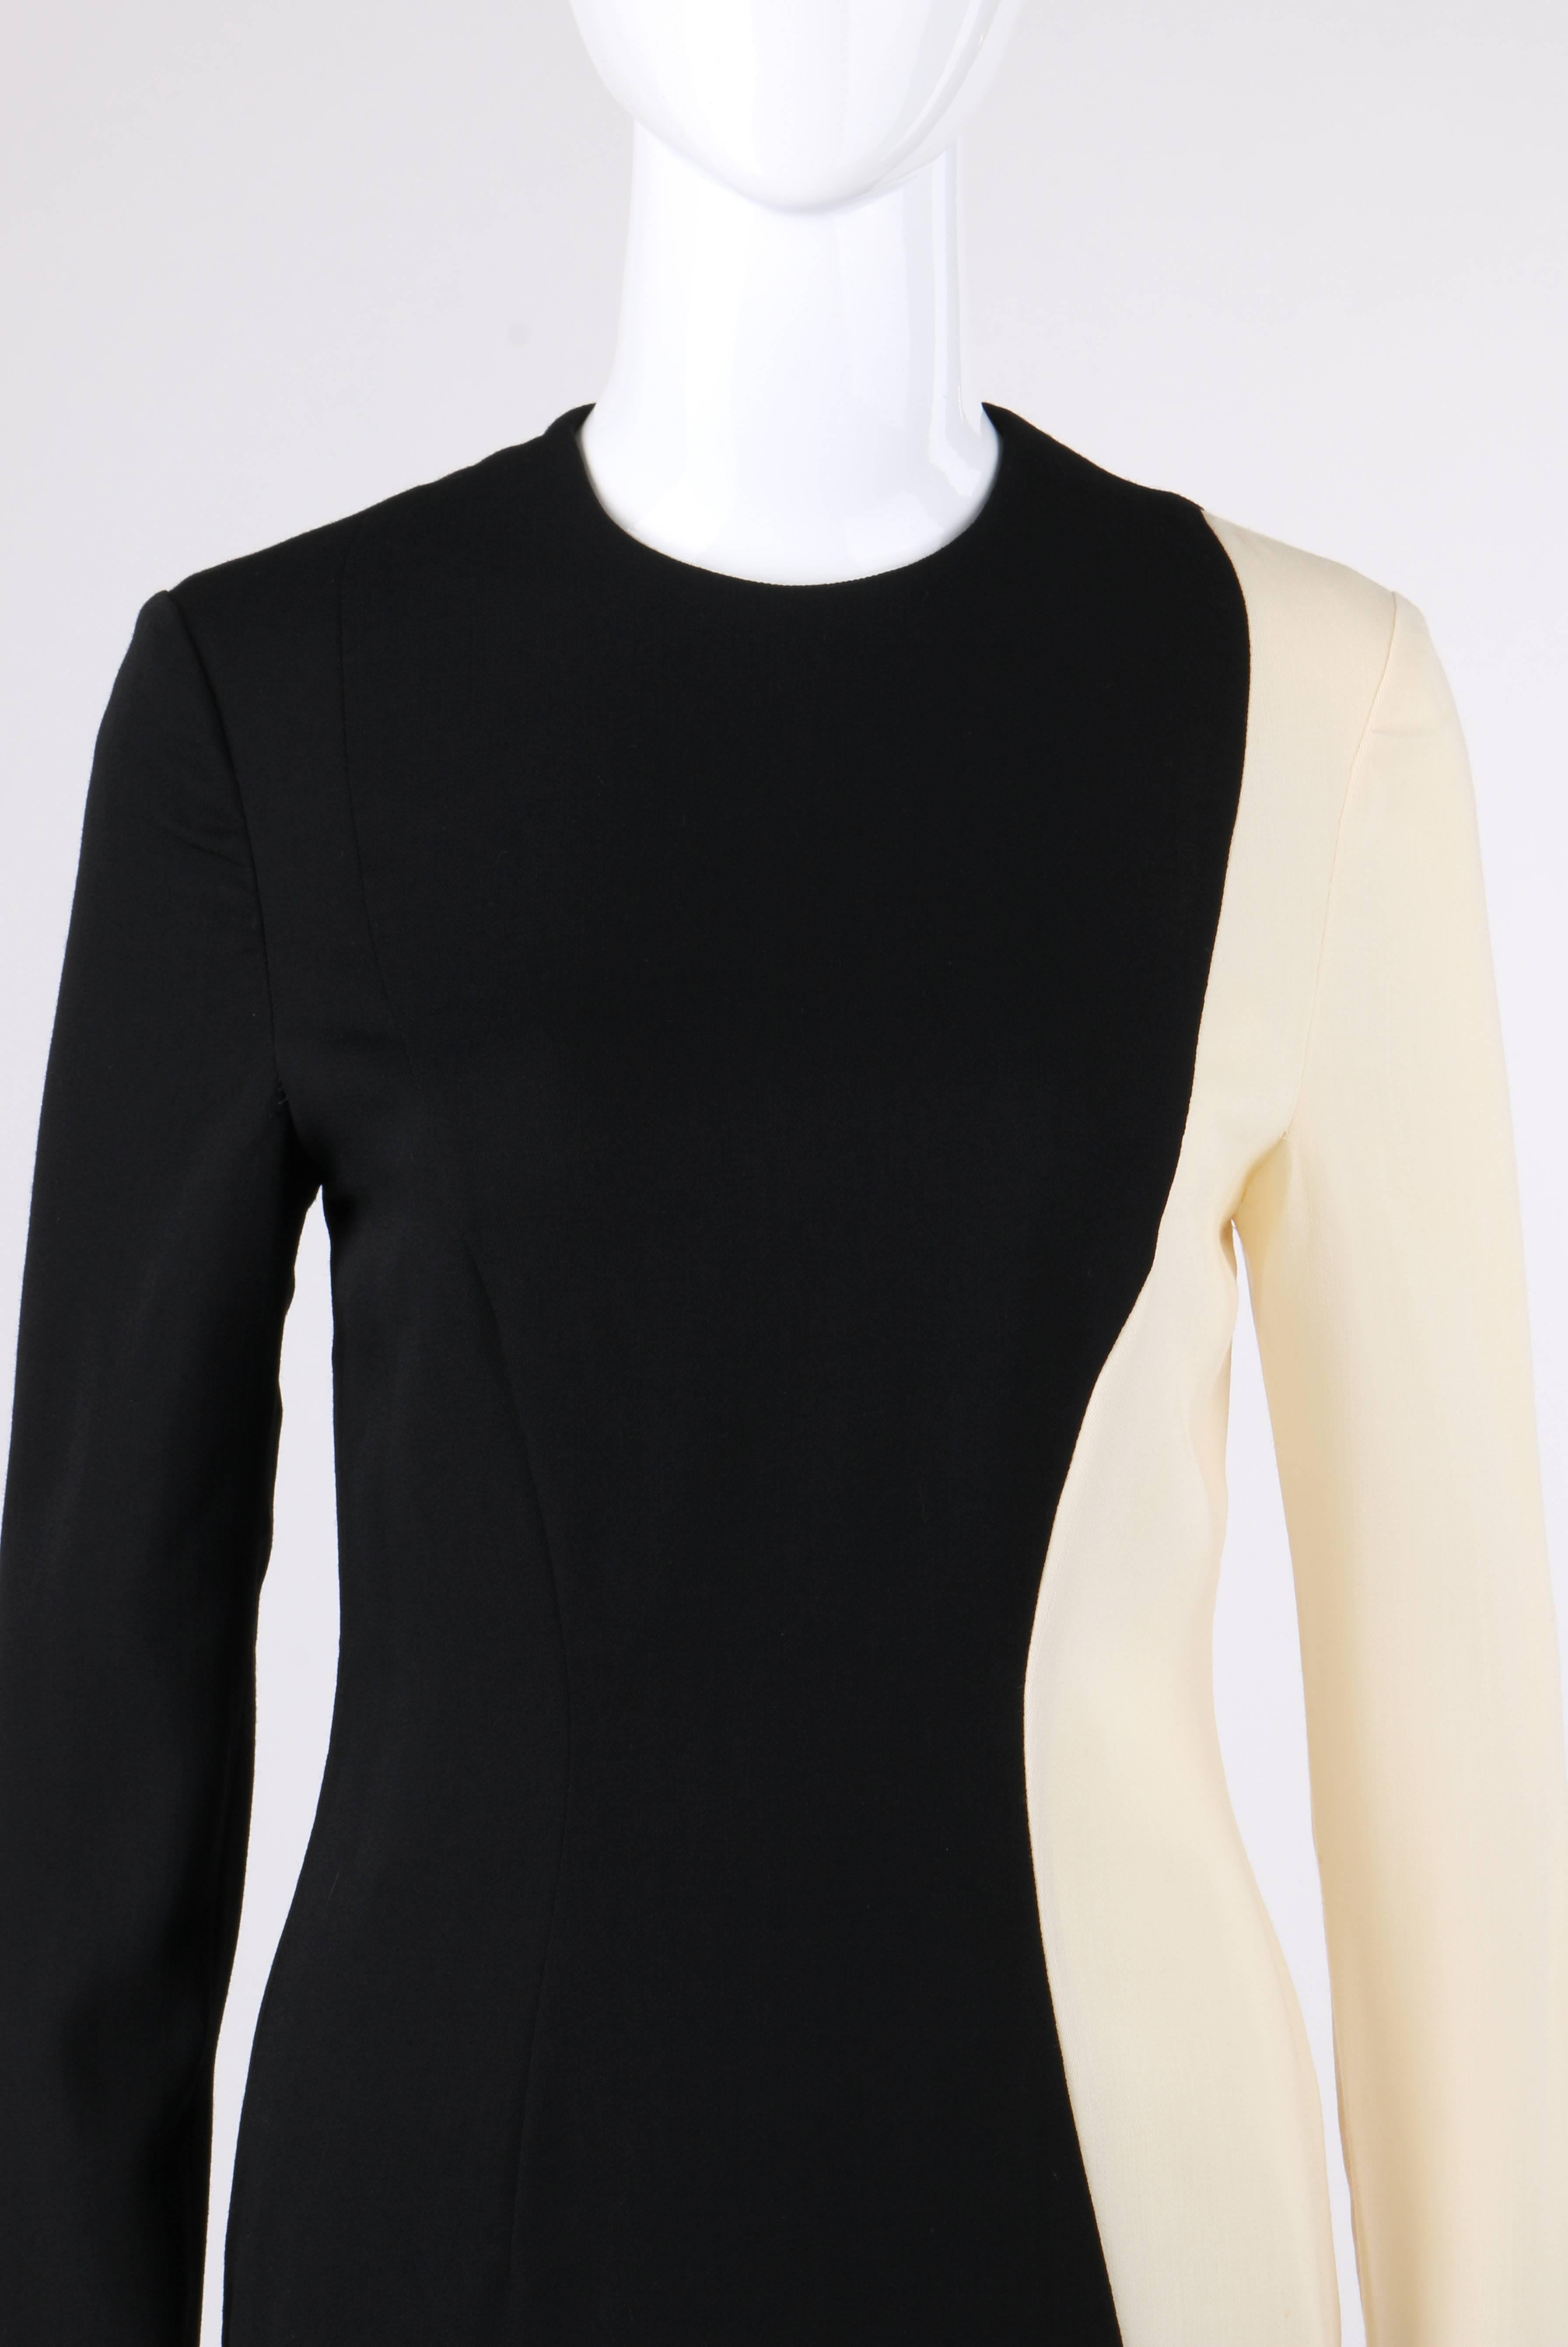 PIERRE CARDIN c.1980's Black & Ivory Color-Block Wool Long Sleeve Shift Dress For Sale 1